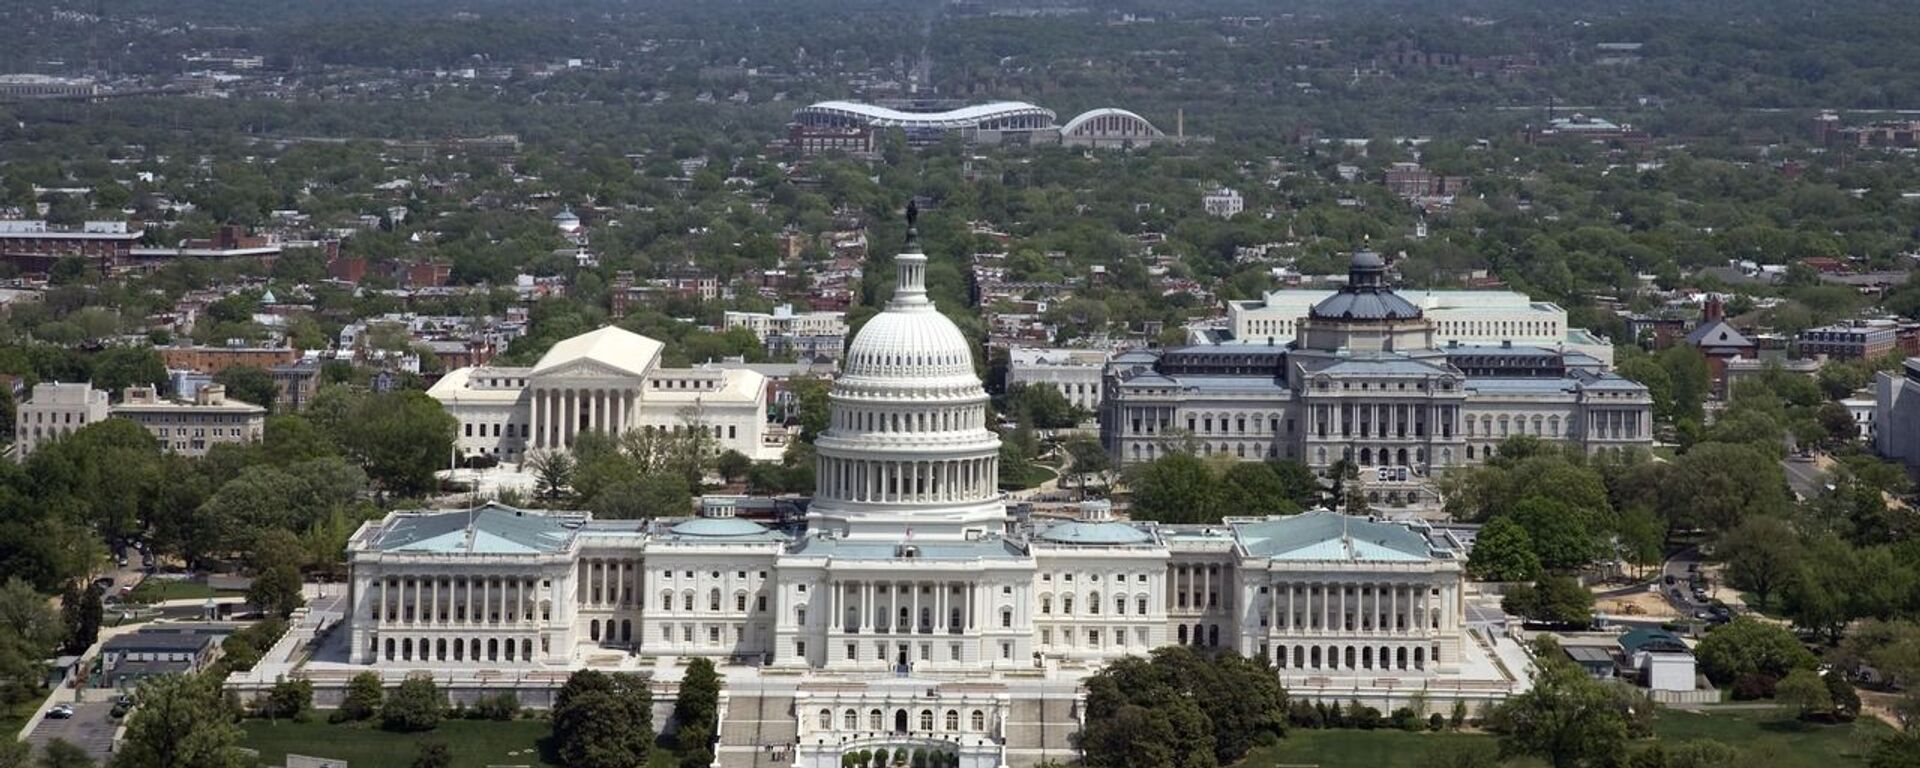 Aerial view, United States Capitol building, Washington, D.C  - Sputnik International, 1920, 17.03.2021